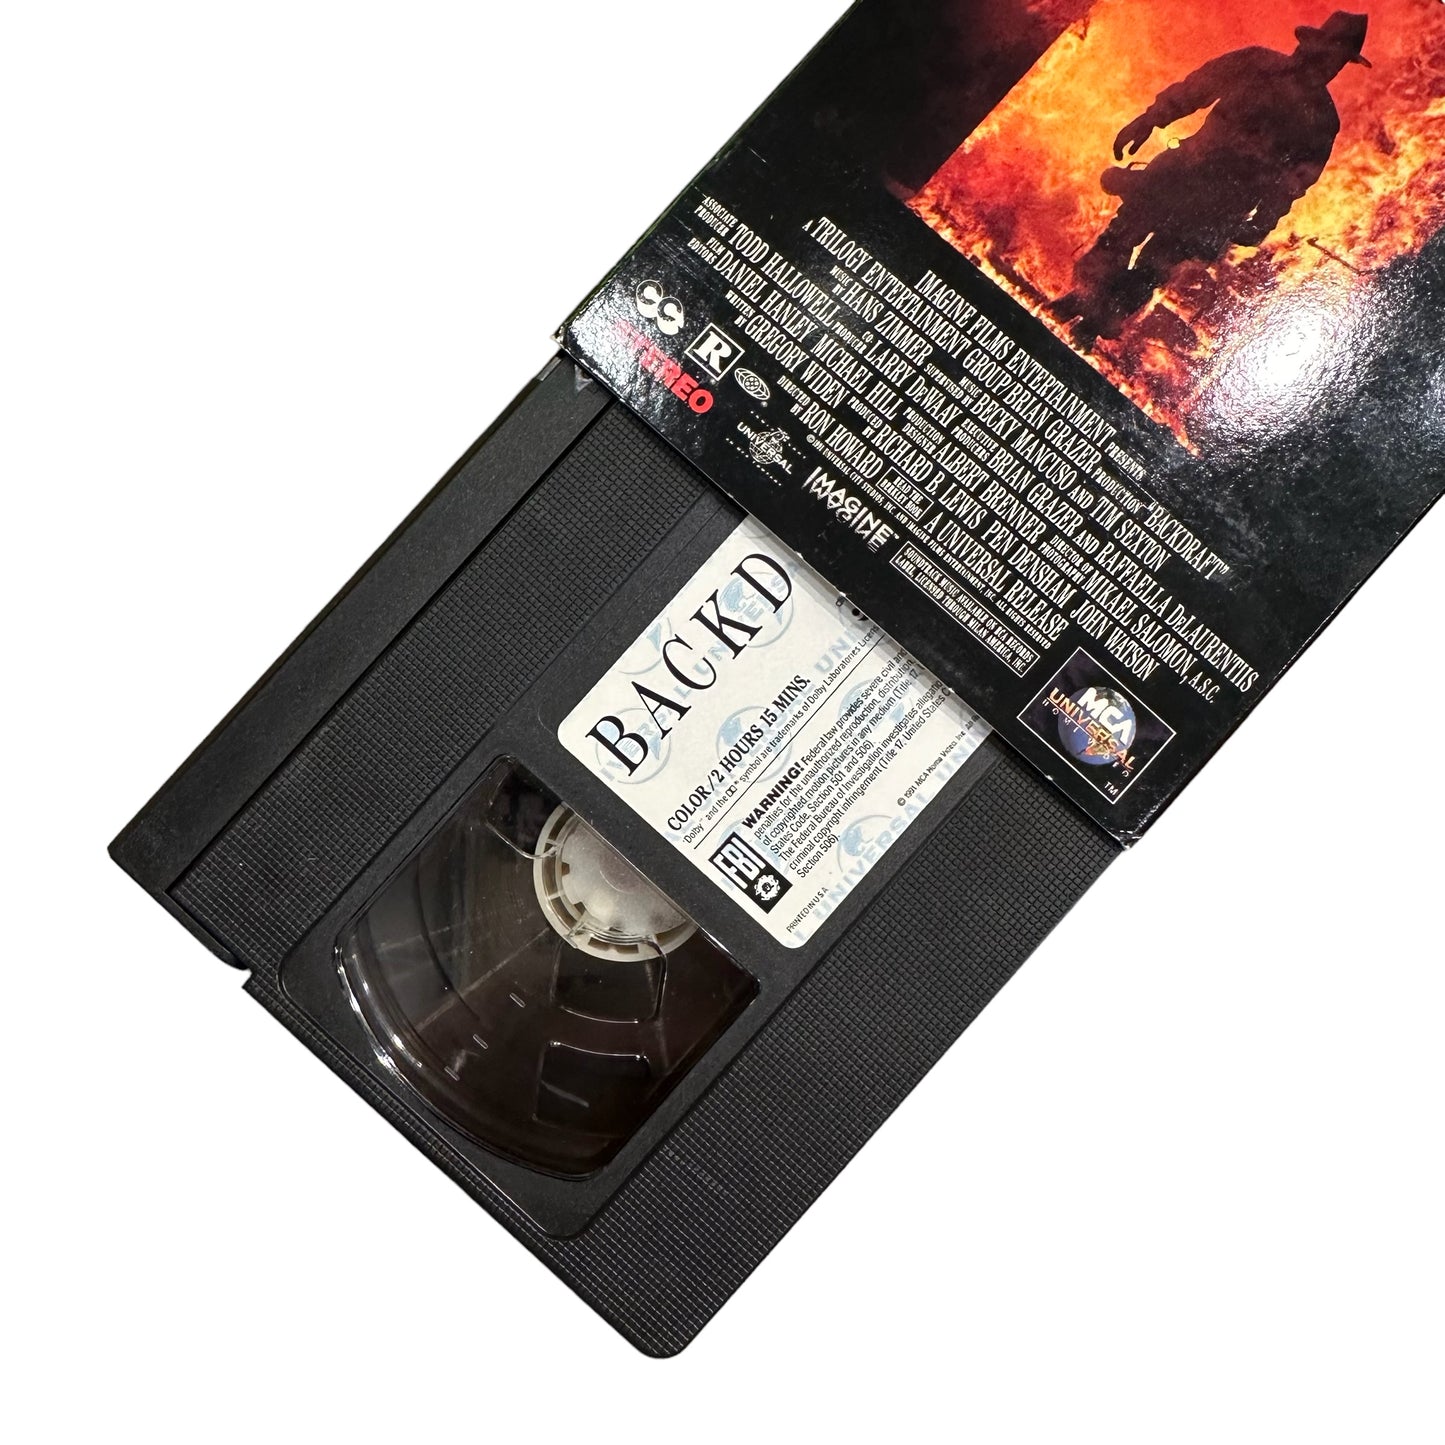 VHS ビデオテープ 輸入版 バックドラフト Backdraft 海外版 USA アメリカ ヴィンテージ ビデオ 紙ジャケ